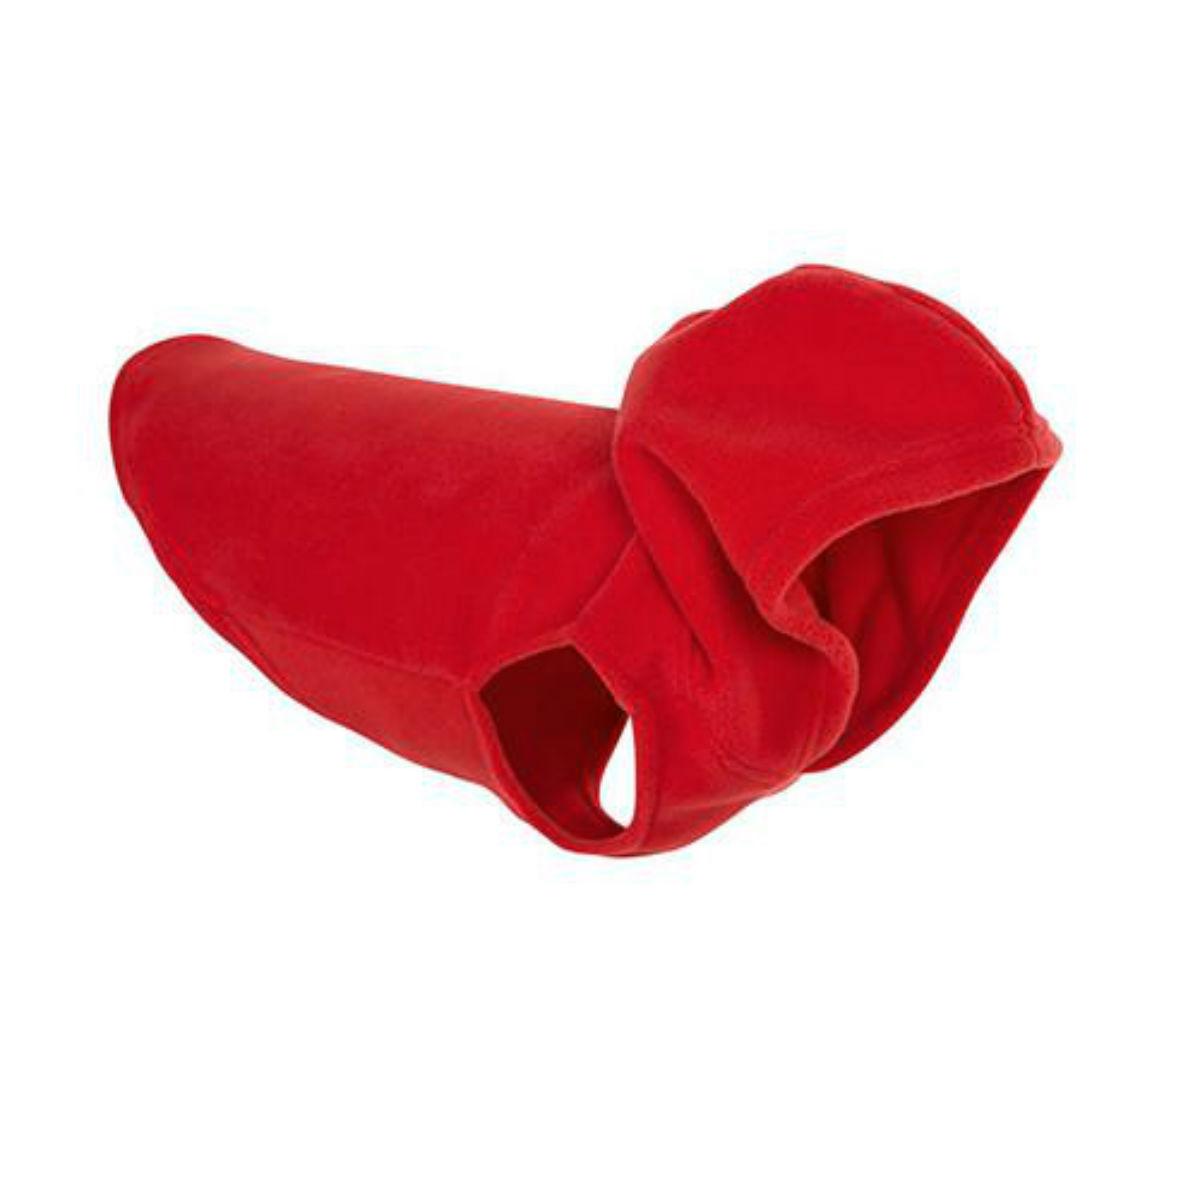 Fleece Vest Hoodie Dog Harness by Gooby - Red